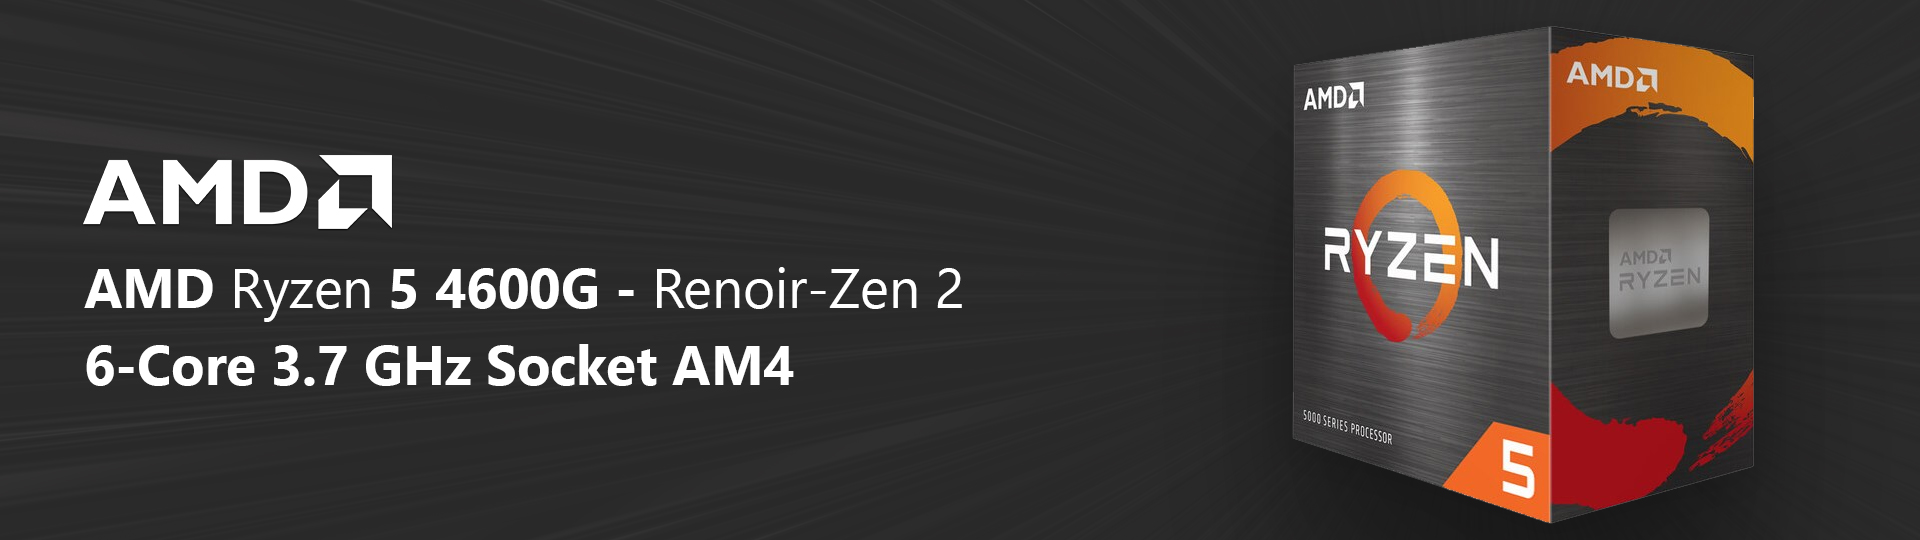 AMD Ryzen 5 4600G - Renoir-Zen 2 6-Core 3.7 GHz Socket AM4